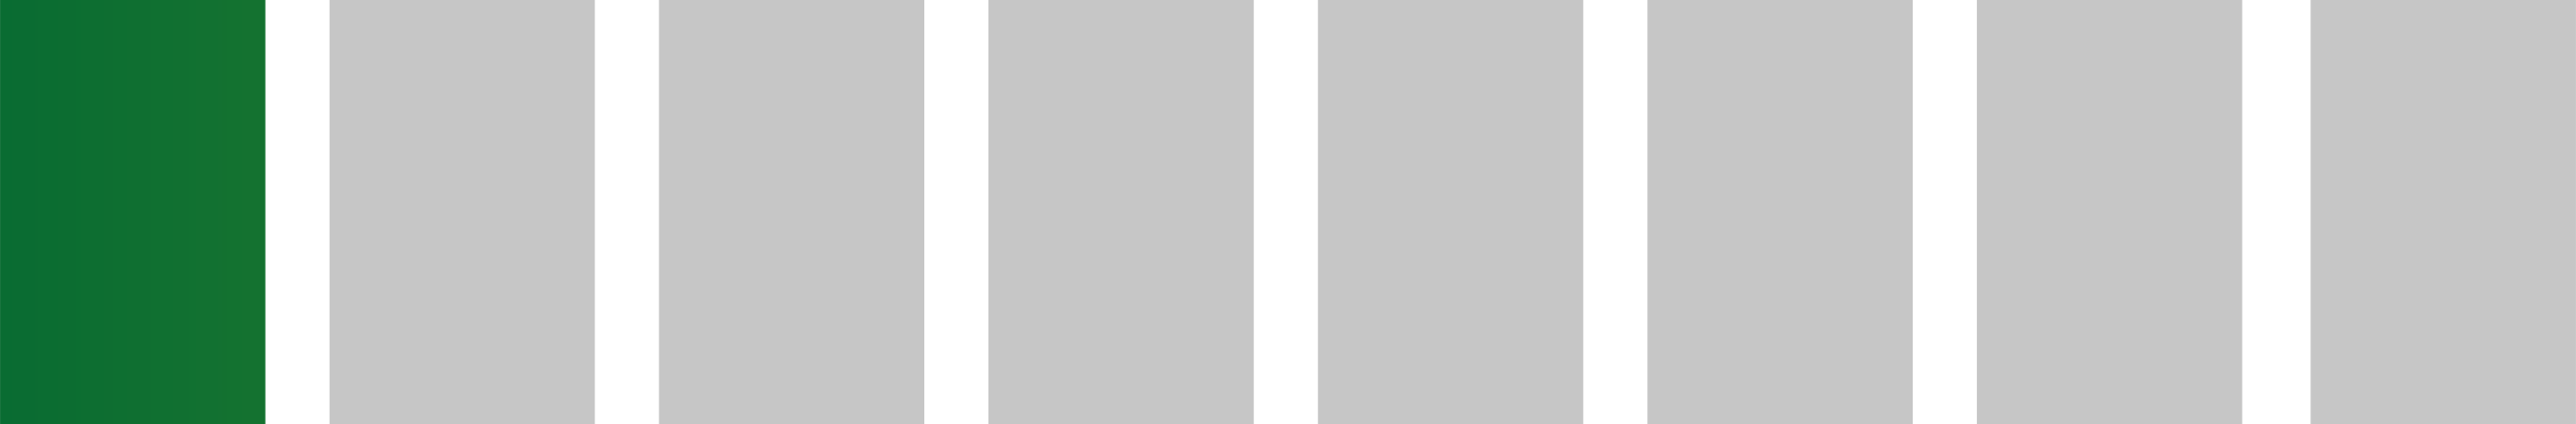 green element horizontal histogram PNG、SVG